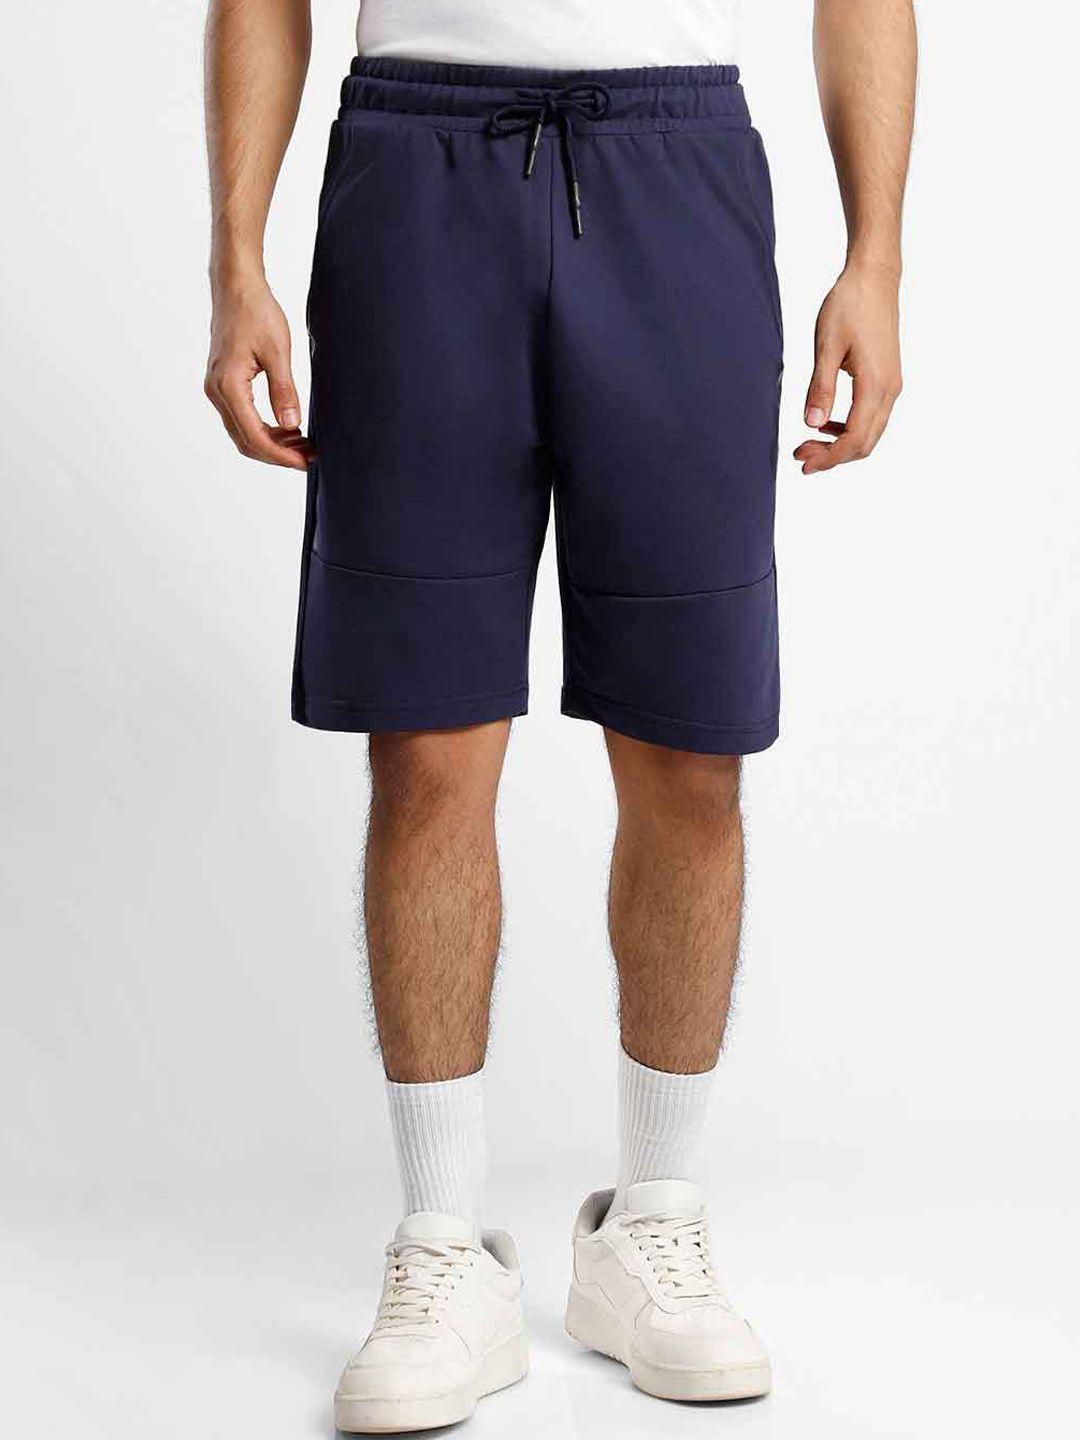 nobero men navy blue shorts